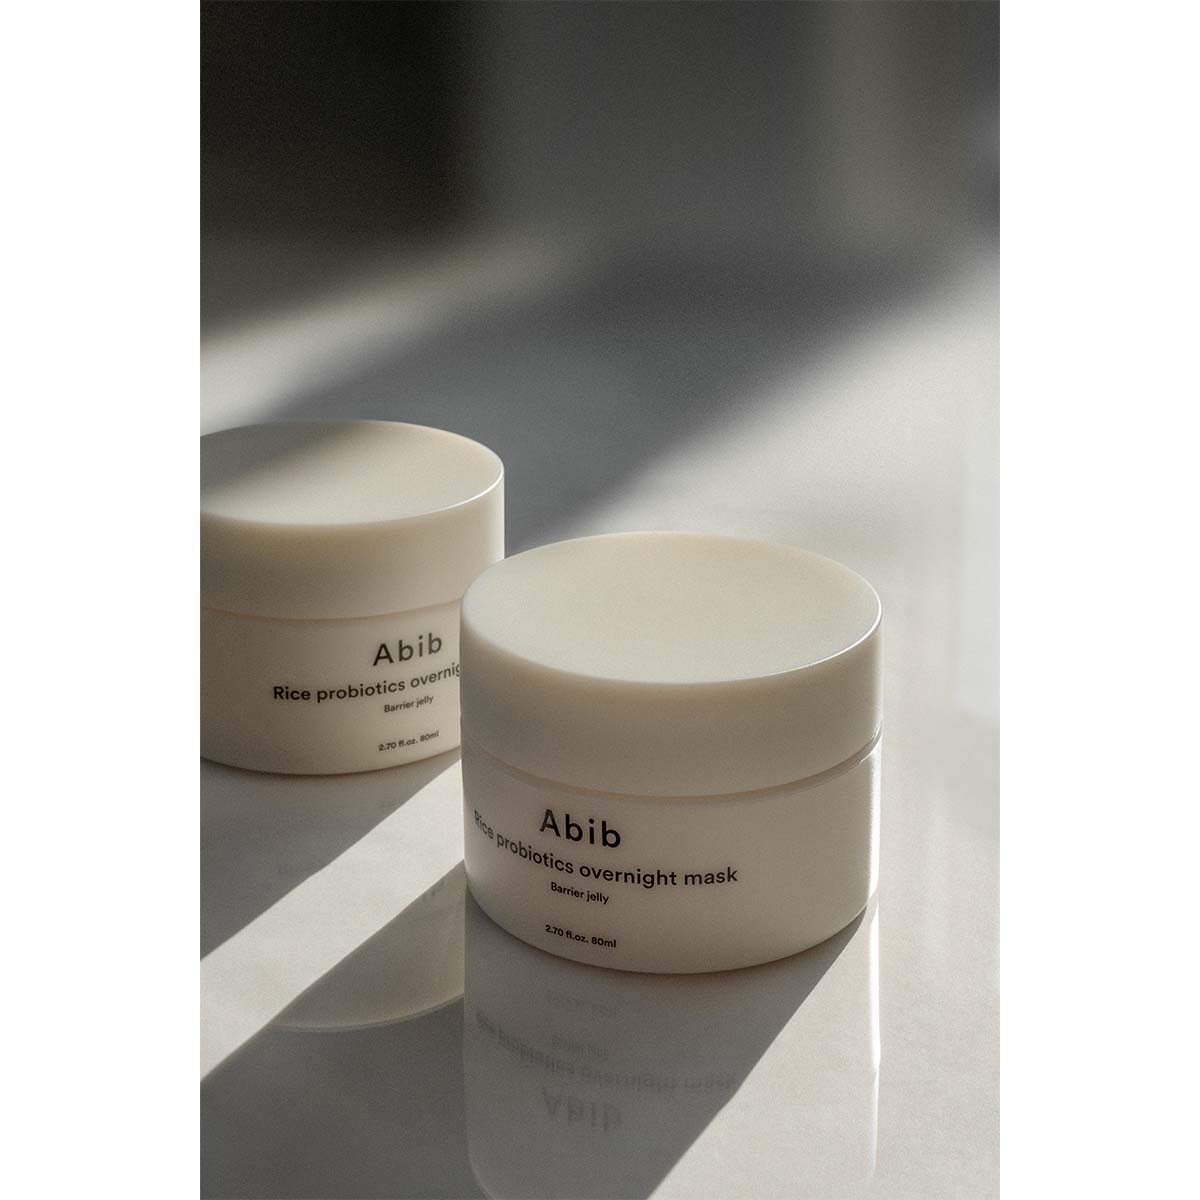 Abib - Rice Probiotics Overnight Mask Barrier Jelly - 80 ml